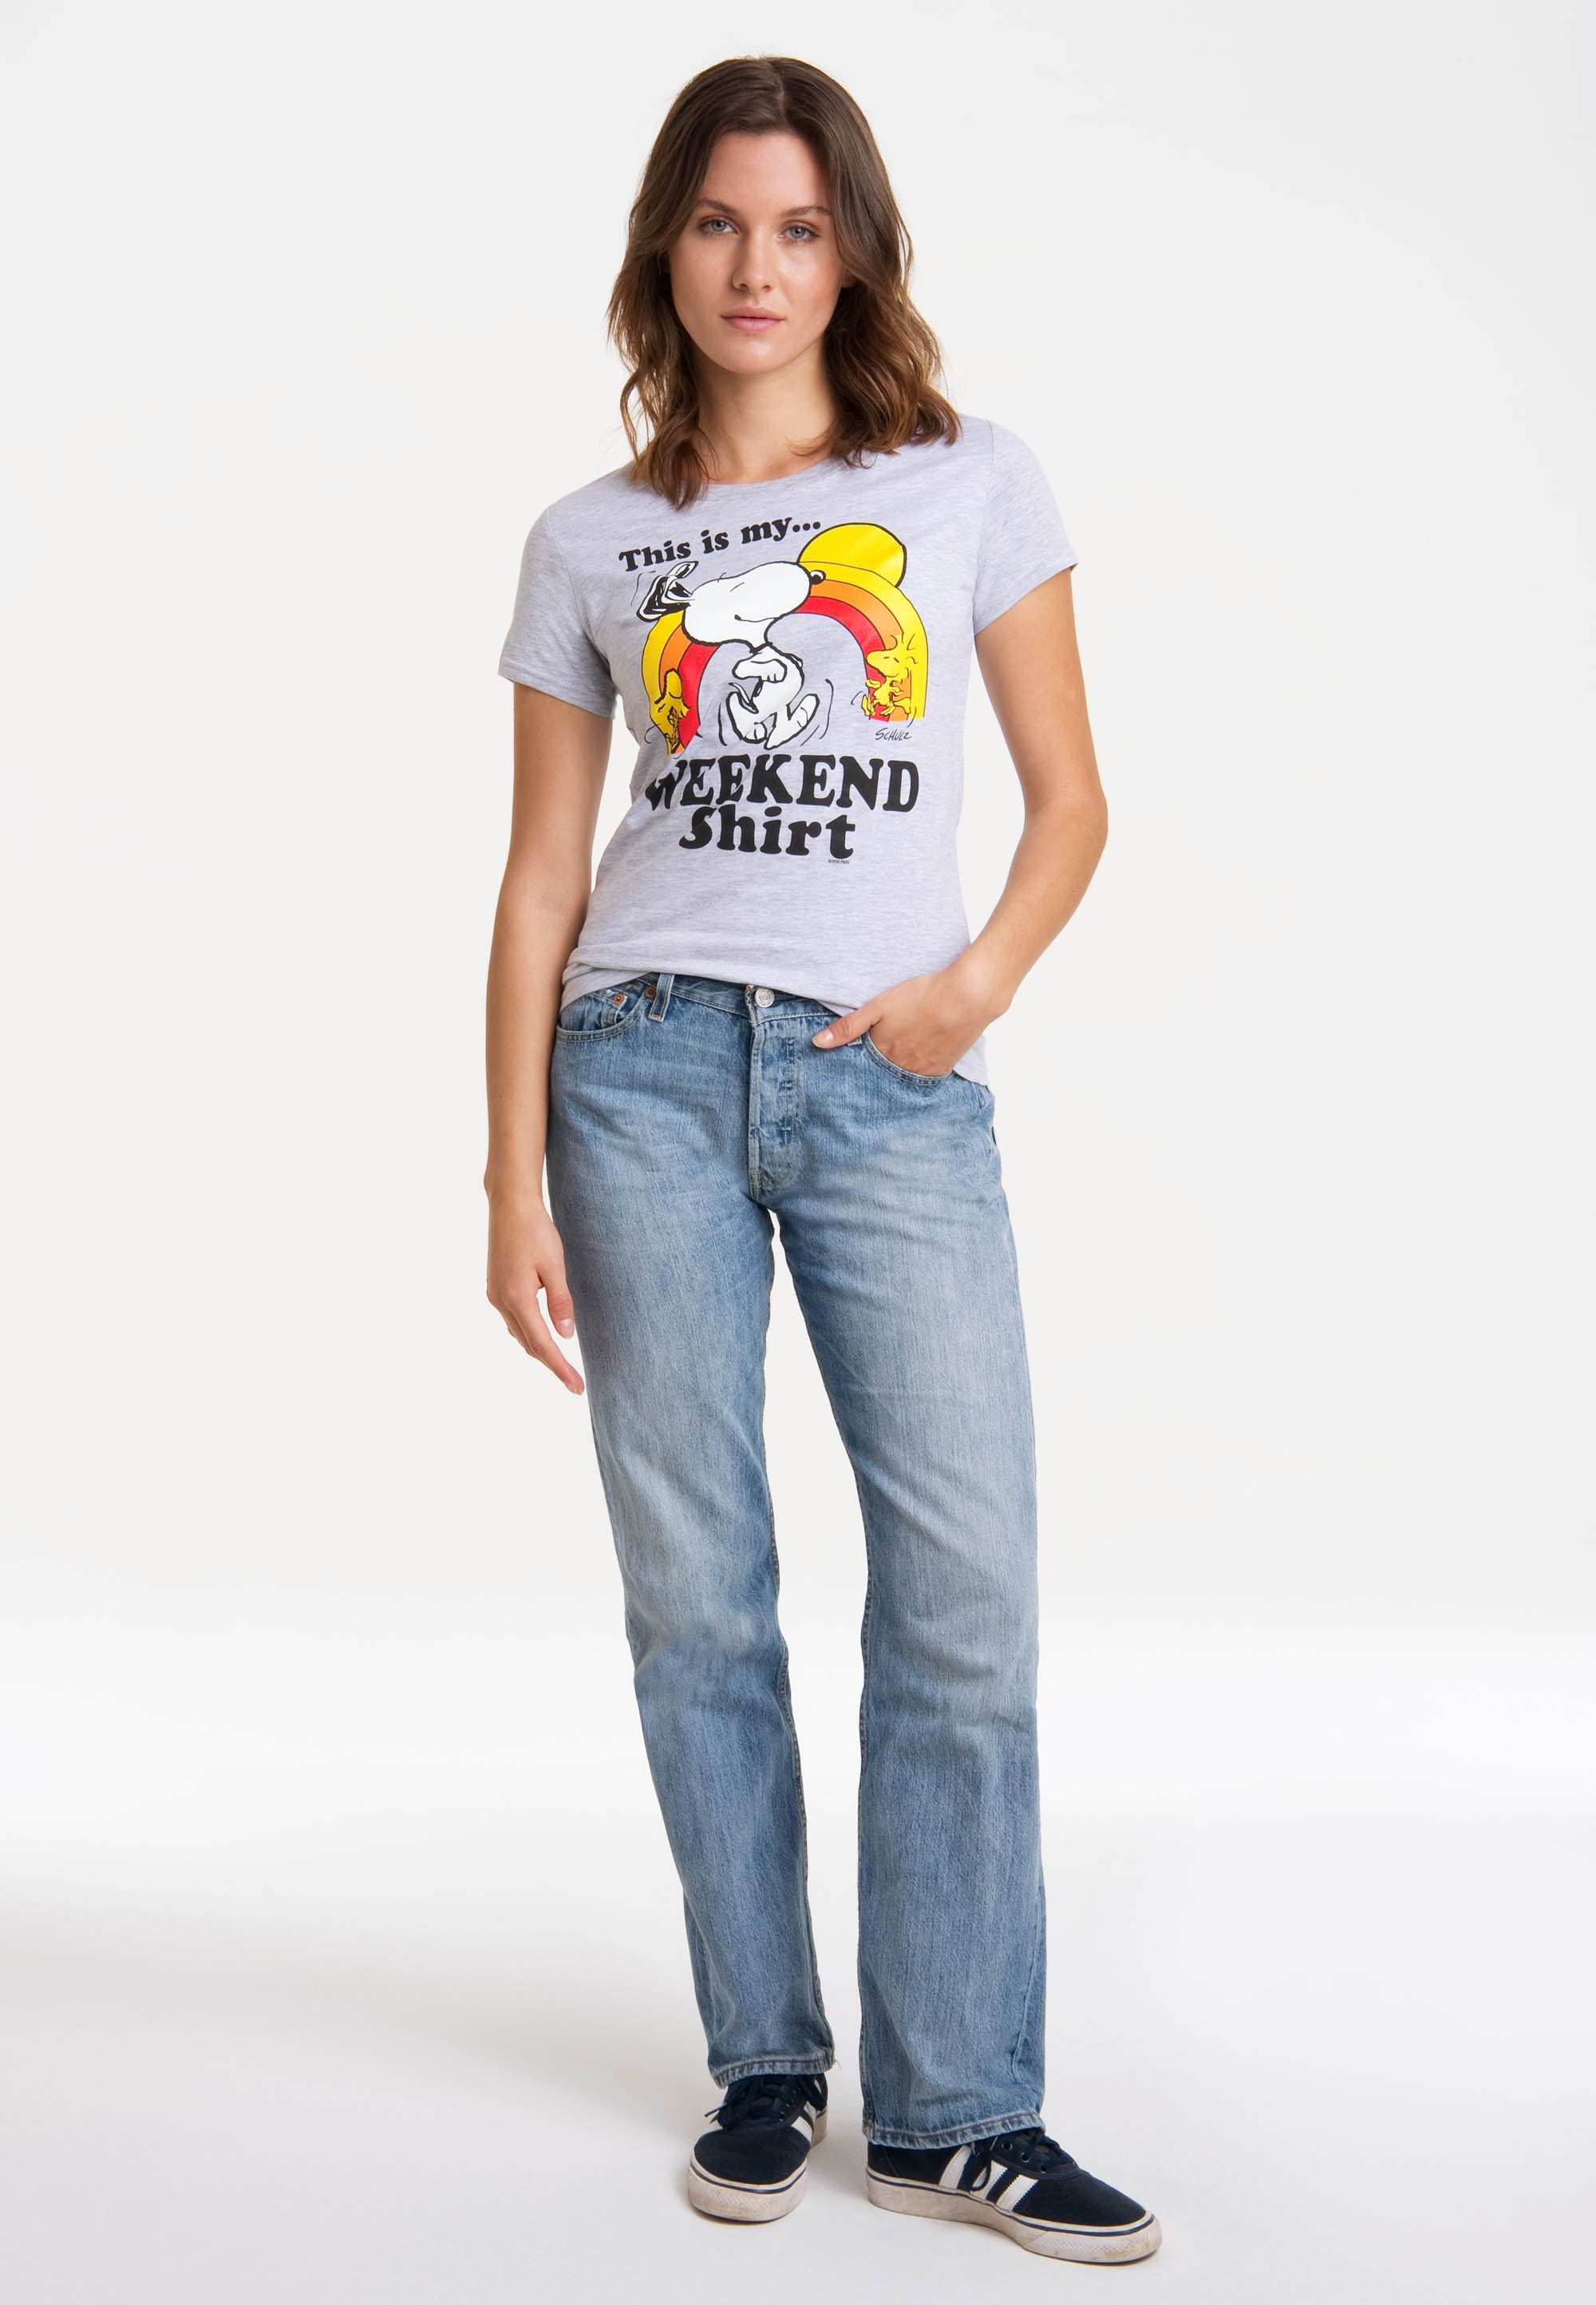 Originaldesign Weekend lizenziertem T-Shirt - & Peanuts LOGOSHIRT Snoopy - mit Woodstock